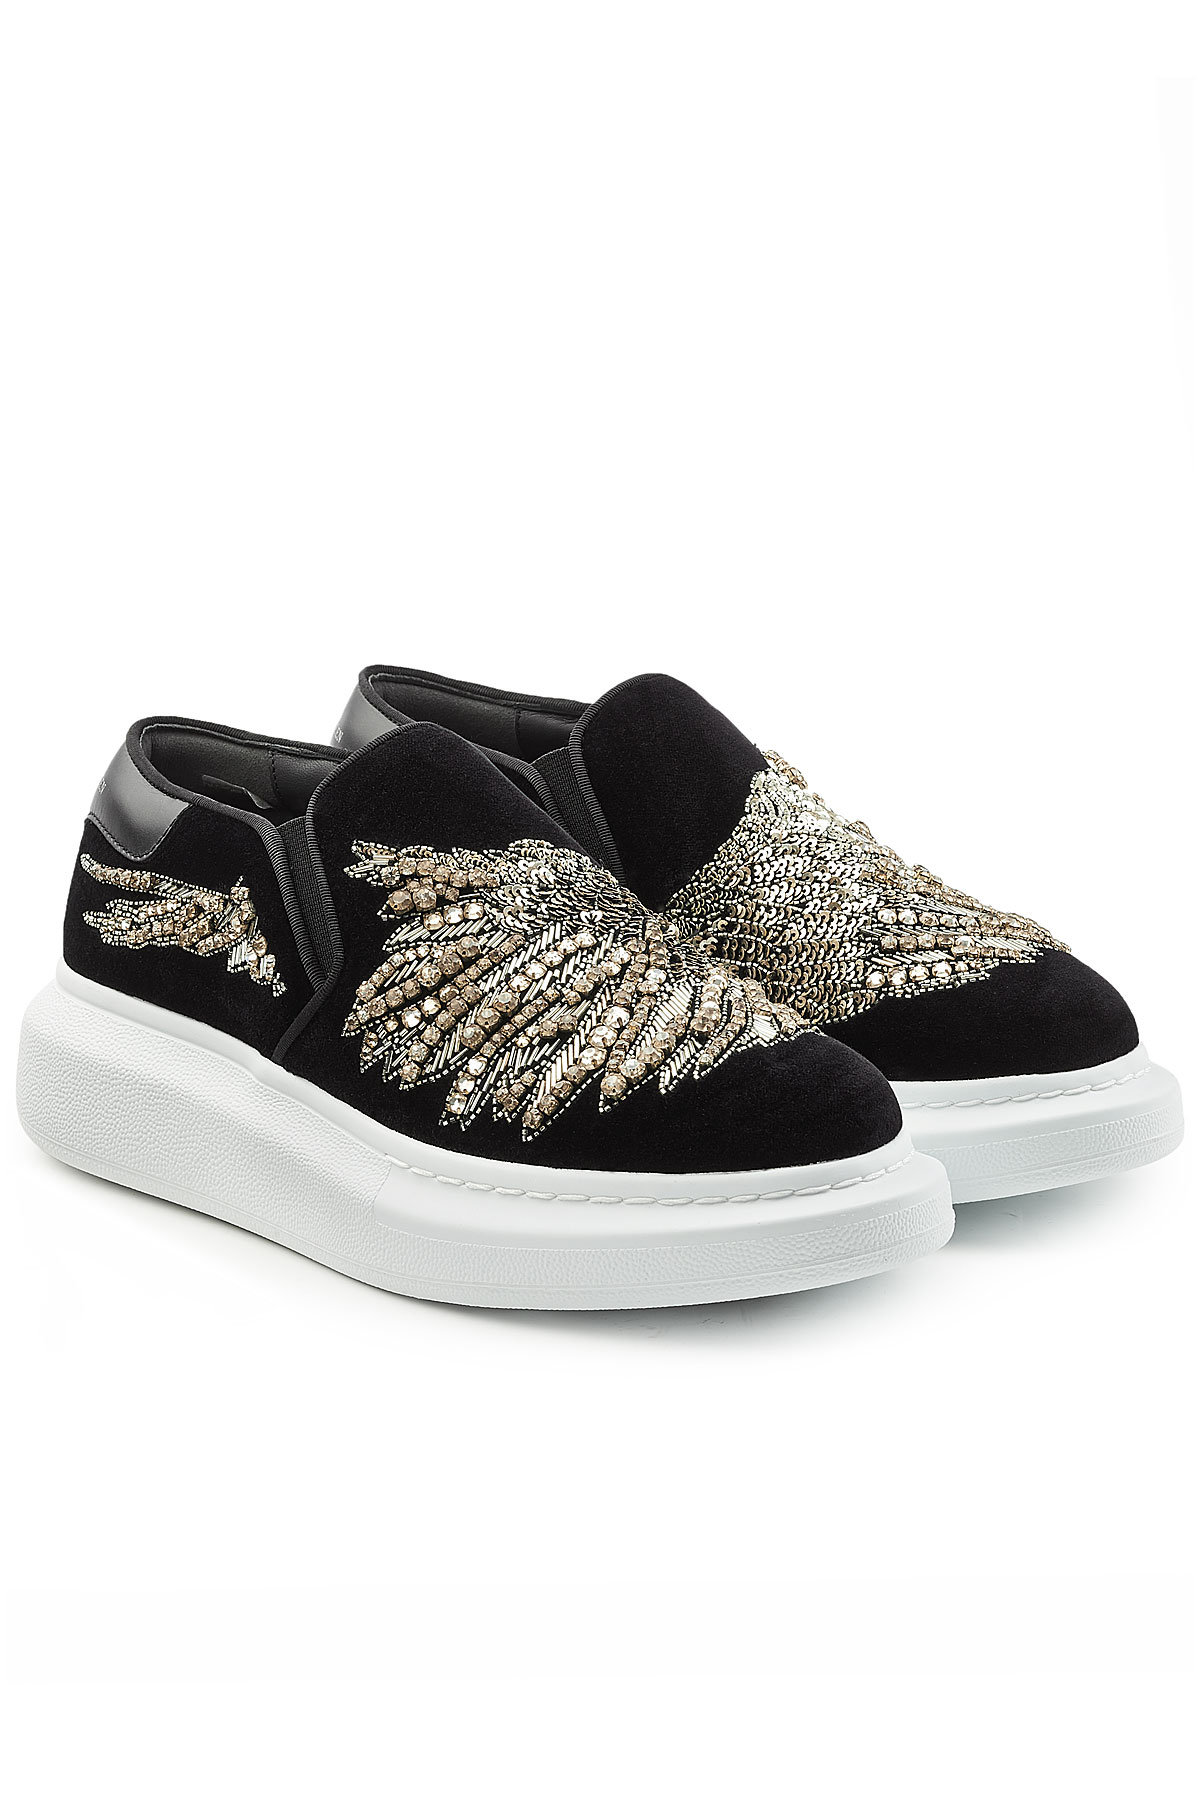 Alexander McQueen - Embellished Velvet Slip-On Platform Sneakers